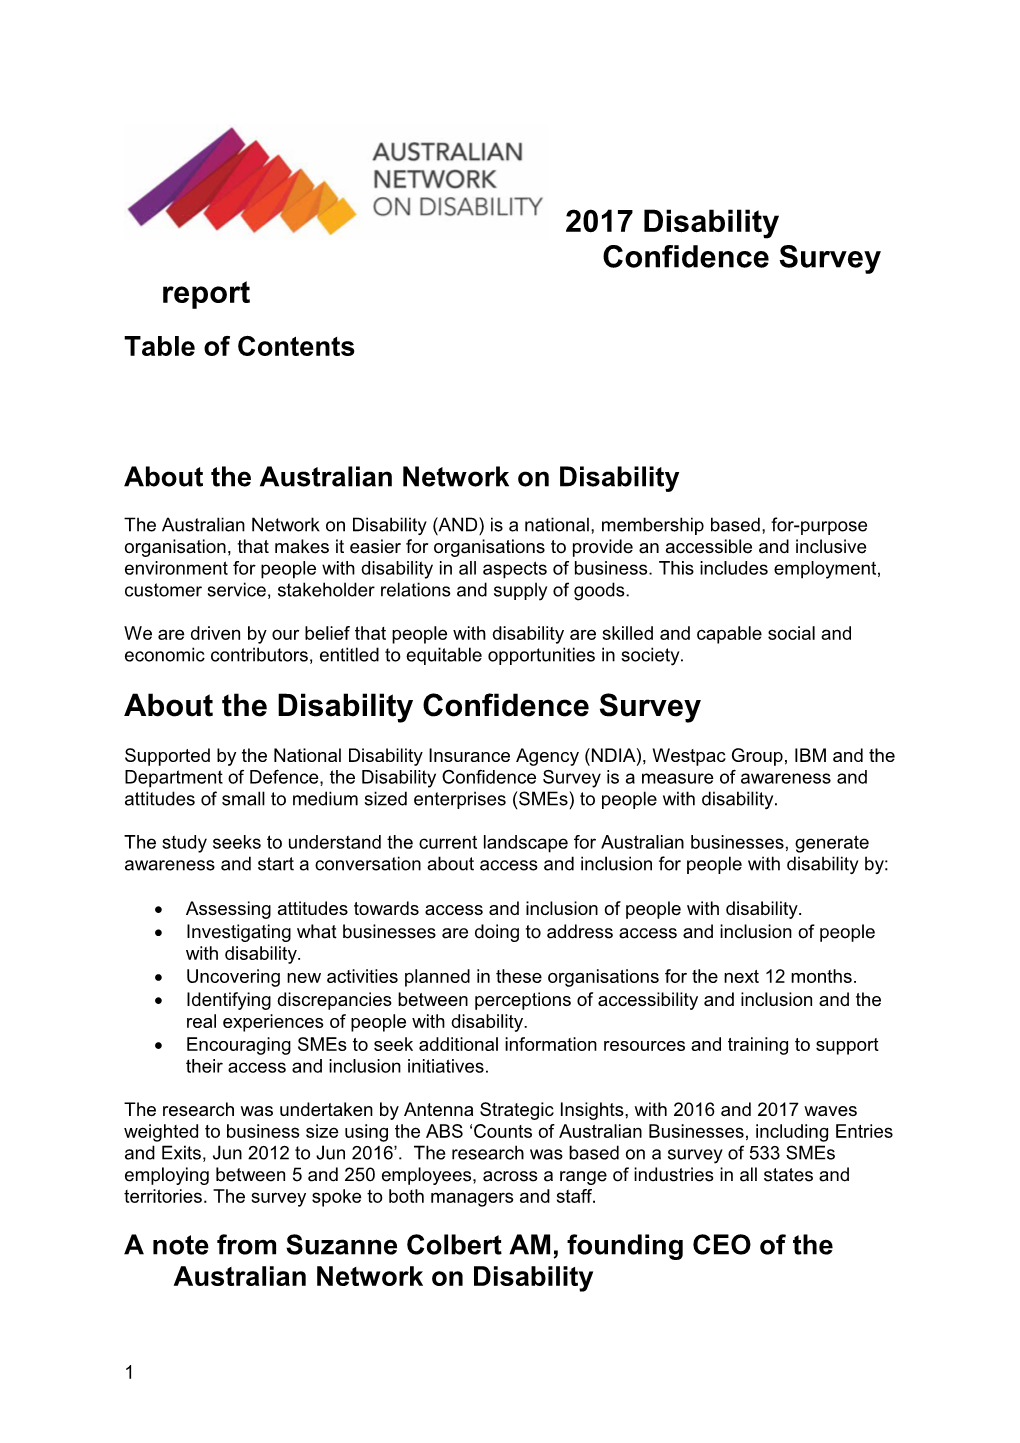 2017 Disability Confidence Survey Report